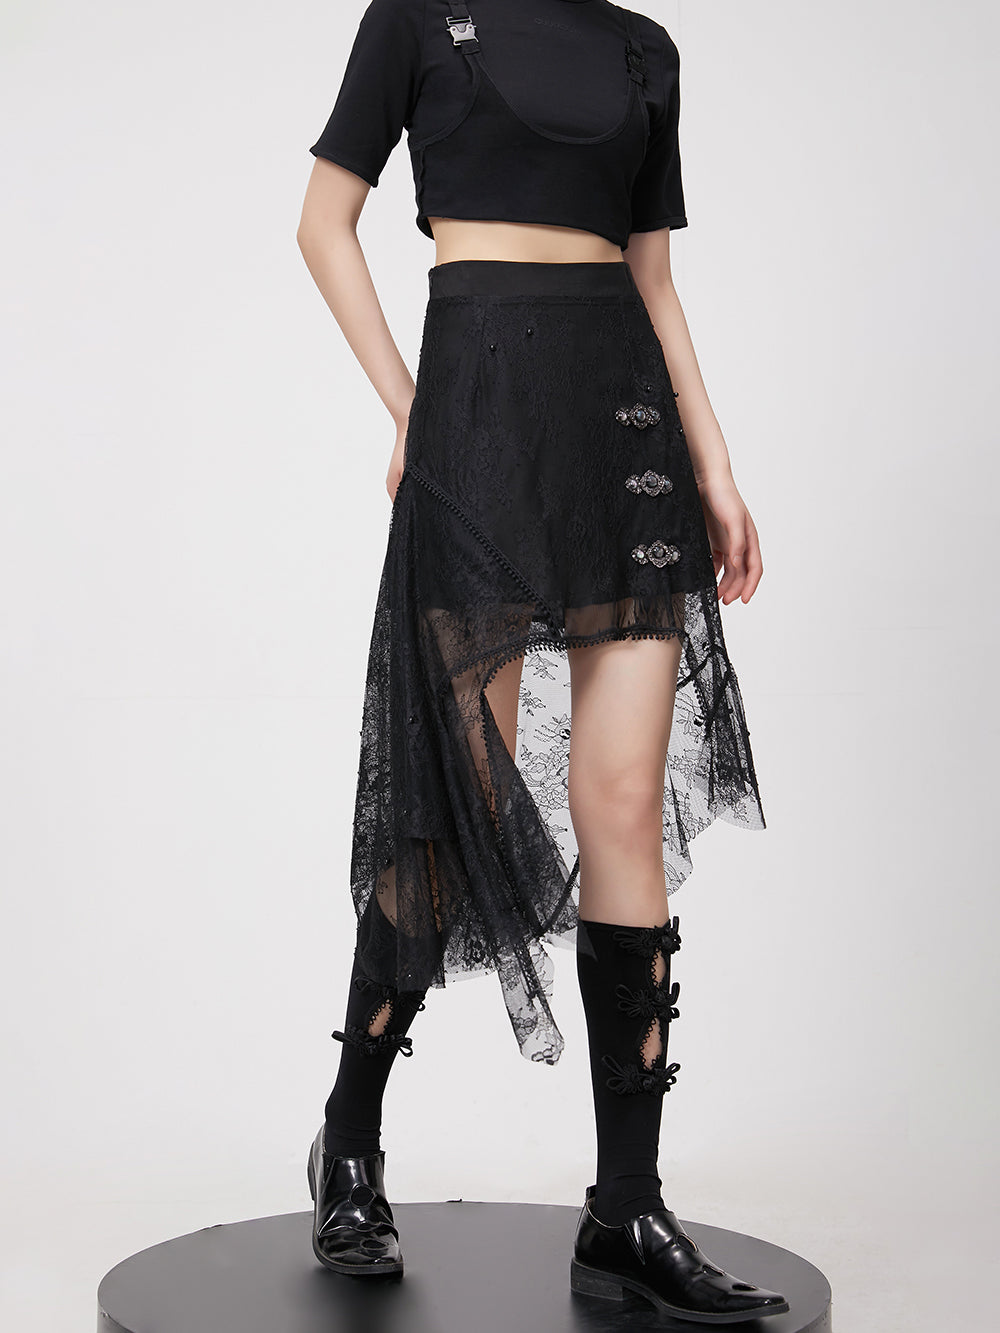 MUKTANK×CUUDICLAB Irregular Lace Midi Skirts